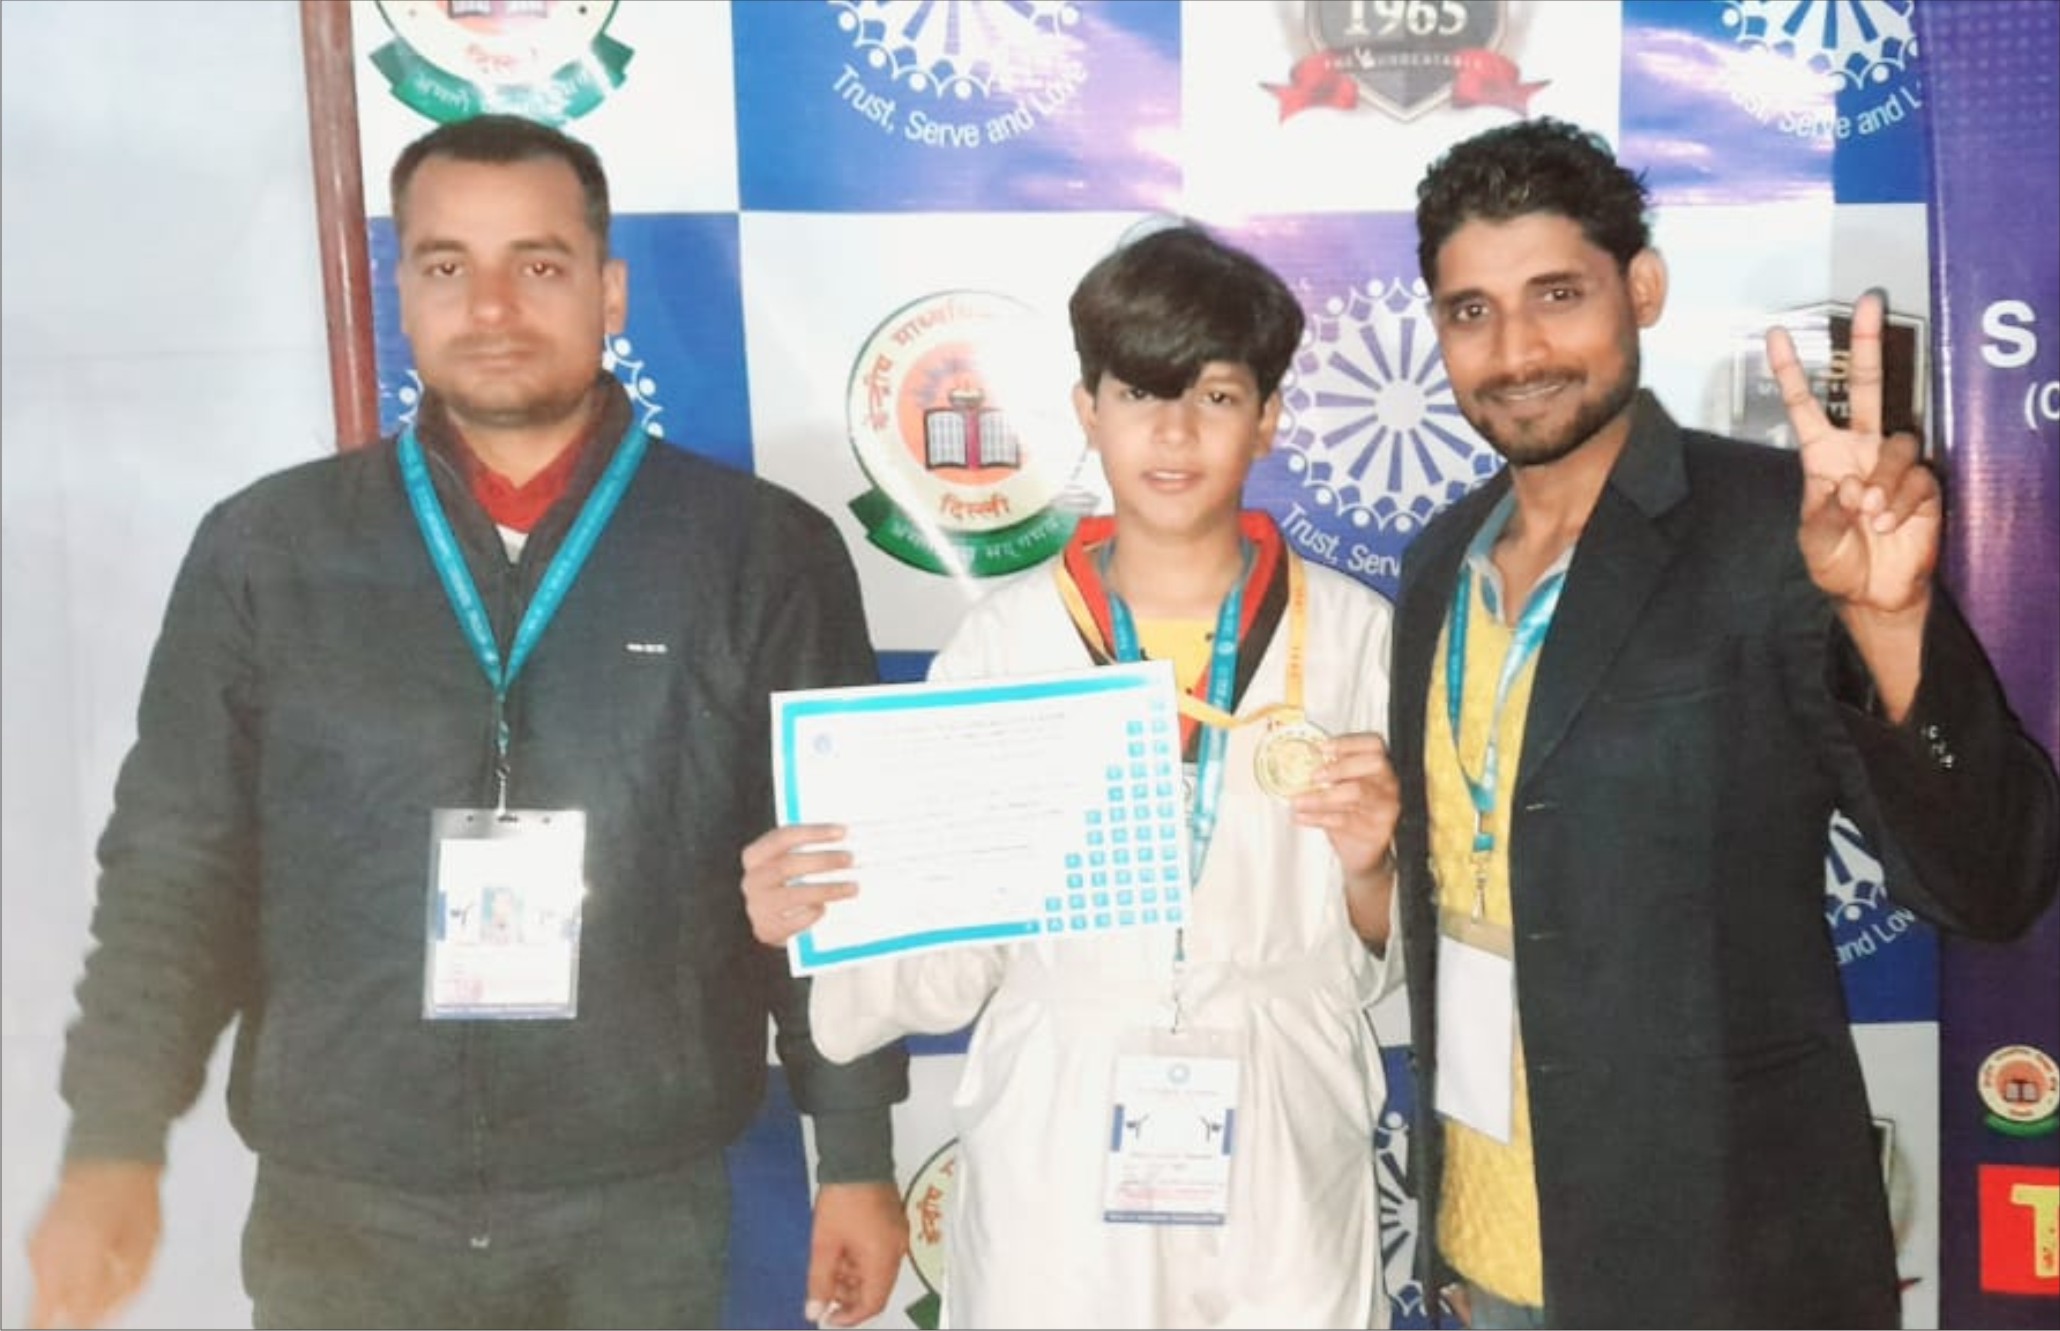 JAUNPUR NEWS: Ojaswi Yadav brought laurels to Badlapur by winning gold medal in Taekwondo